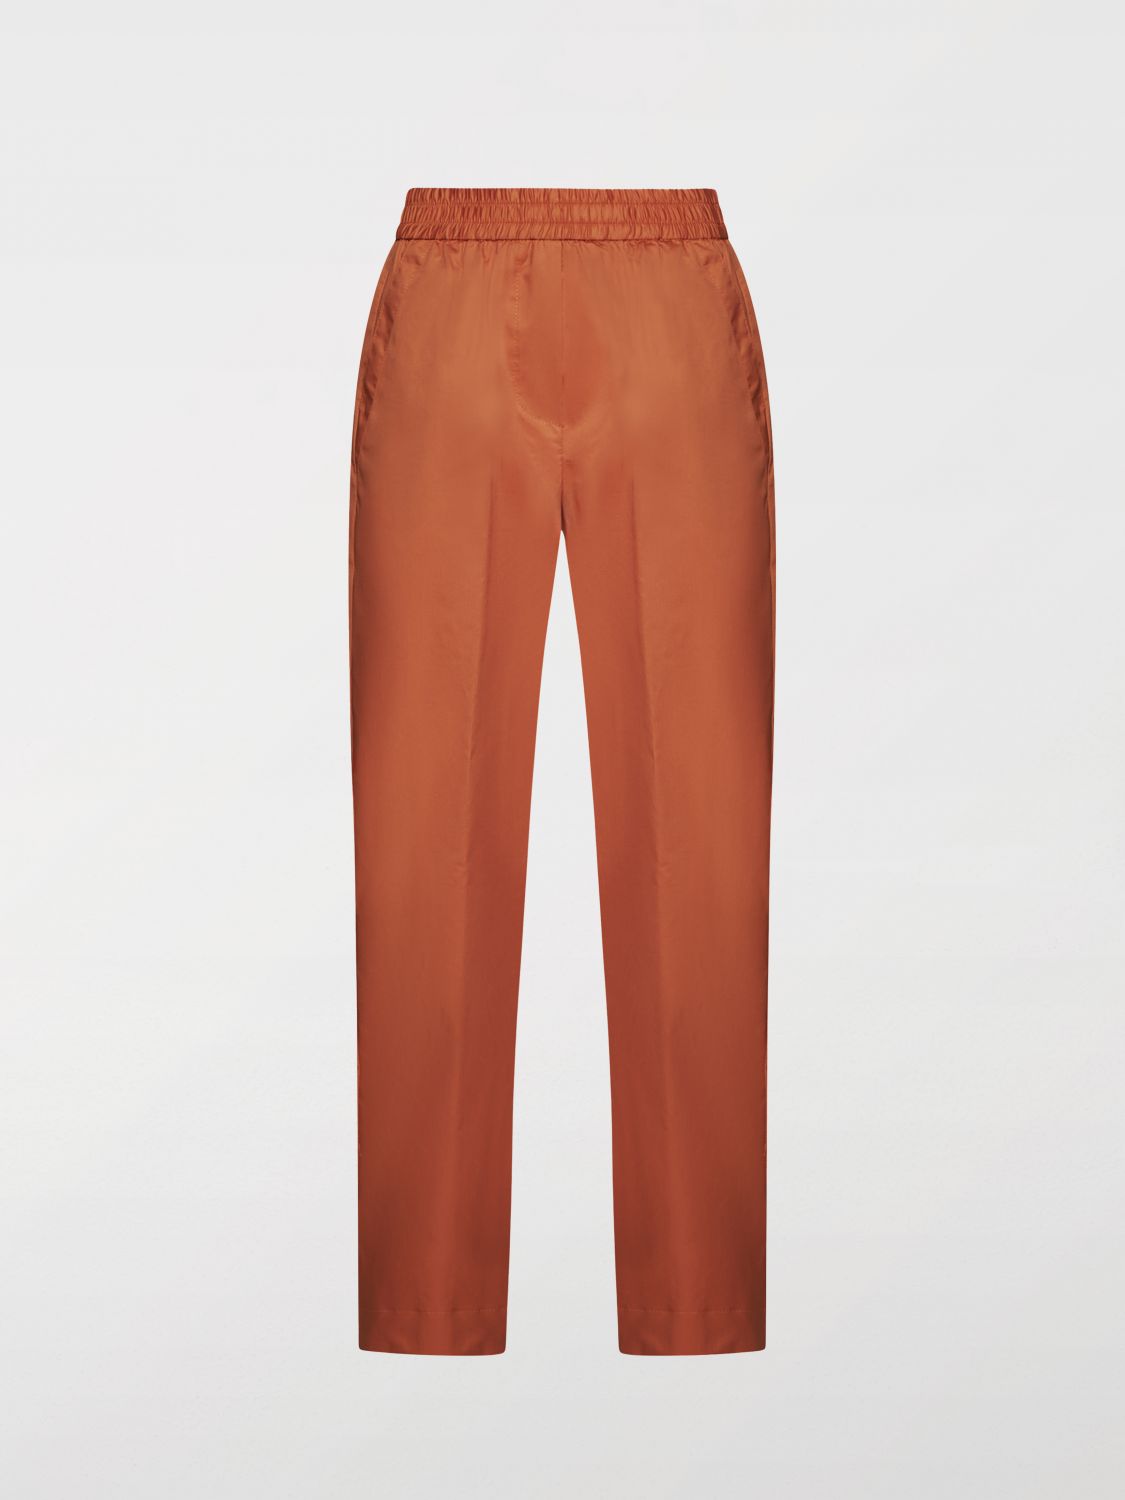 Kaos Pants KAOS Woman color Orange